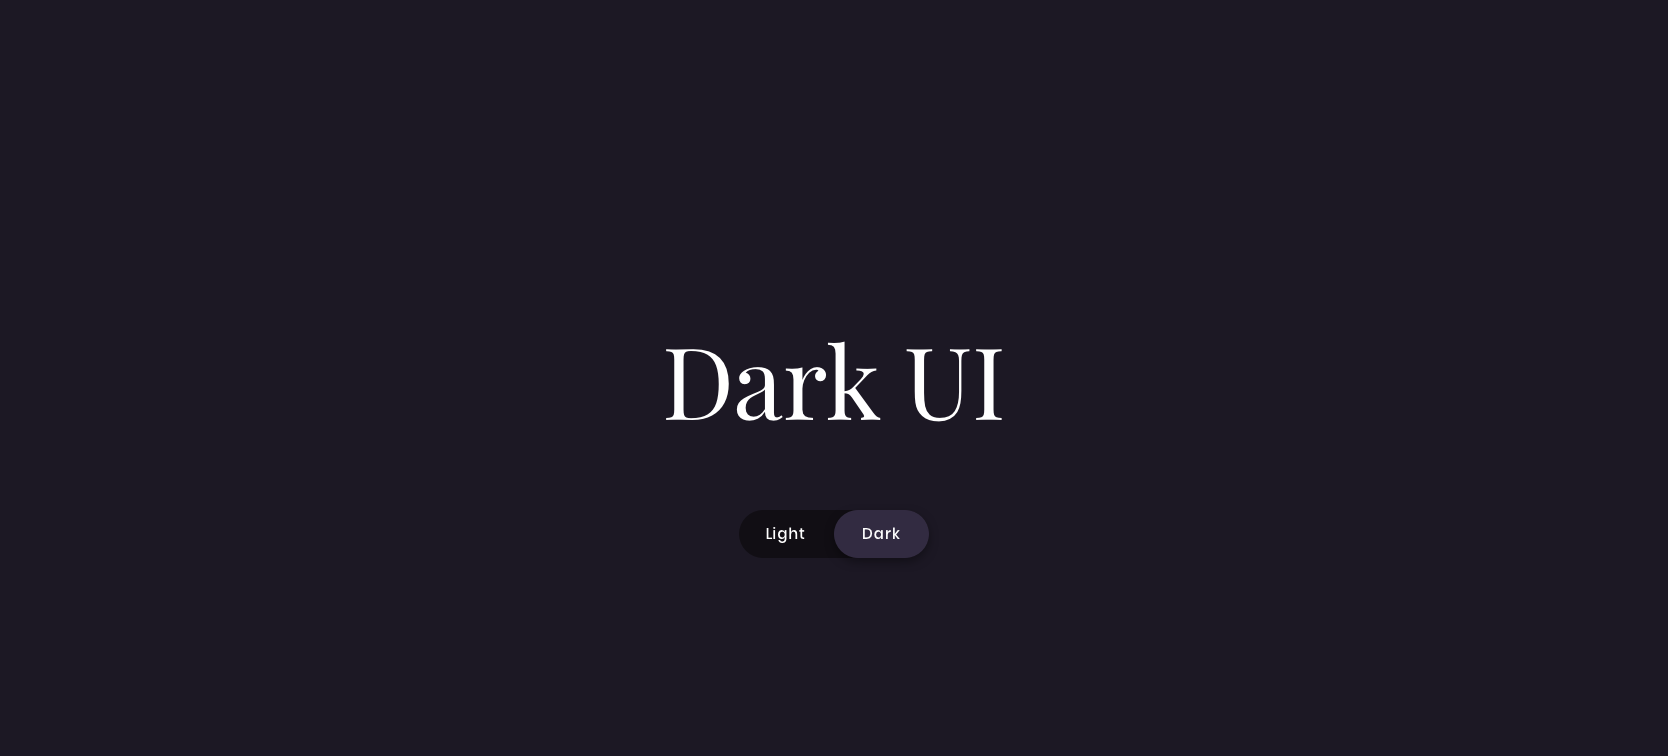 63 Beautiful Dark UI Examples & Design Inspiration